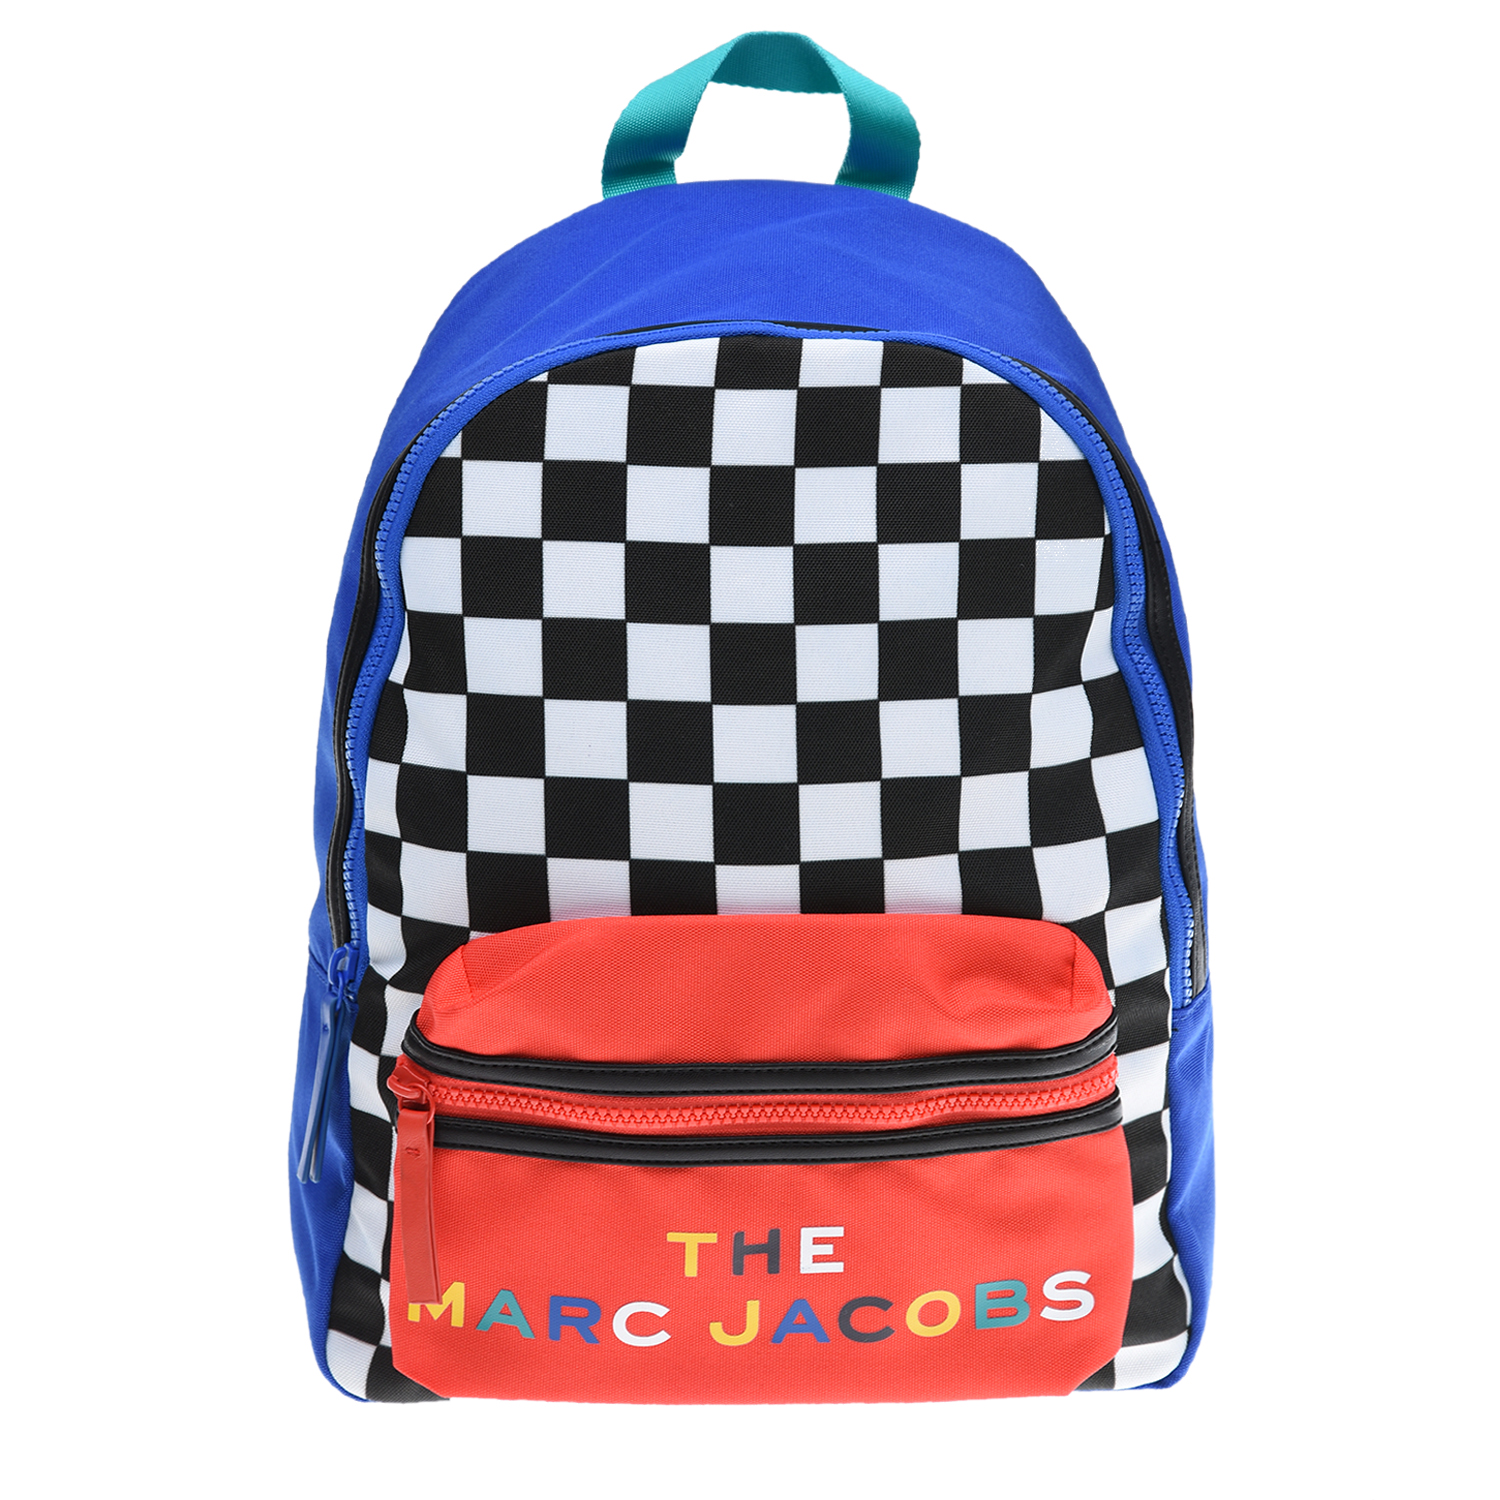 Рюкзак с шахматным принтом 40х12х28 см Little Marc Jacobs детский, размер unica, цвет мультиколор